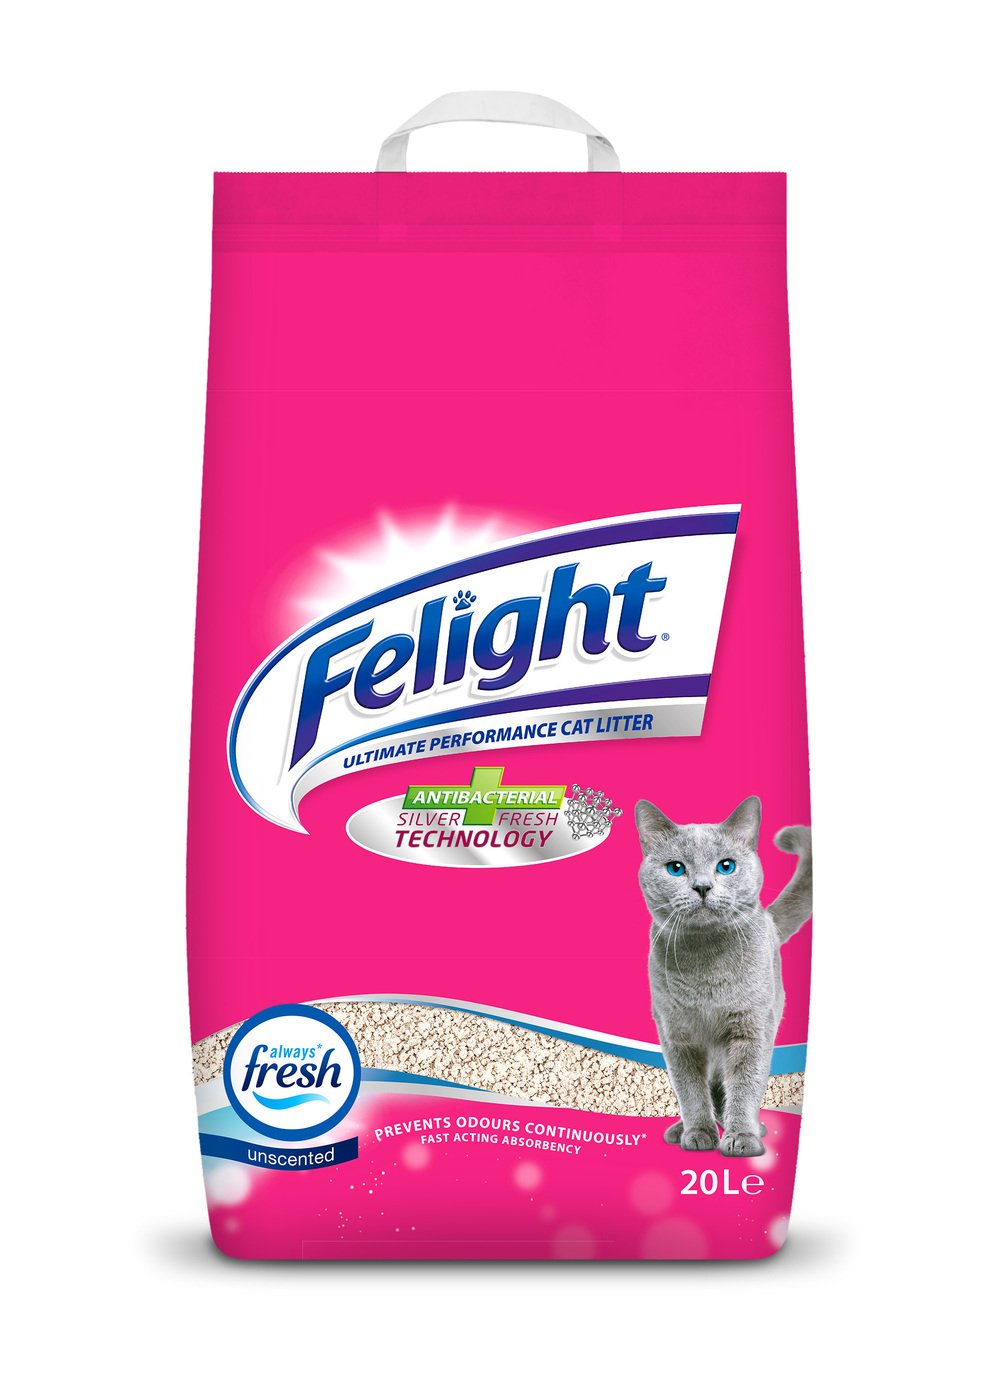 Felight 20L Antibacterial Non-Clumping Cat Litter